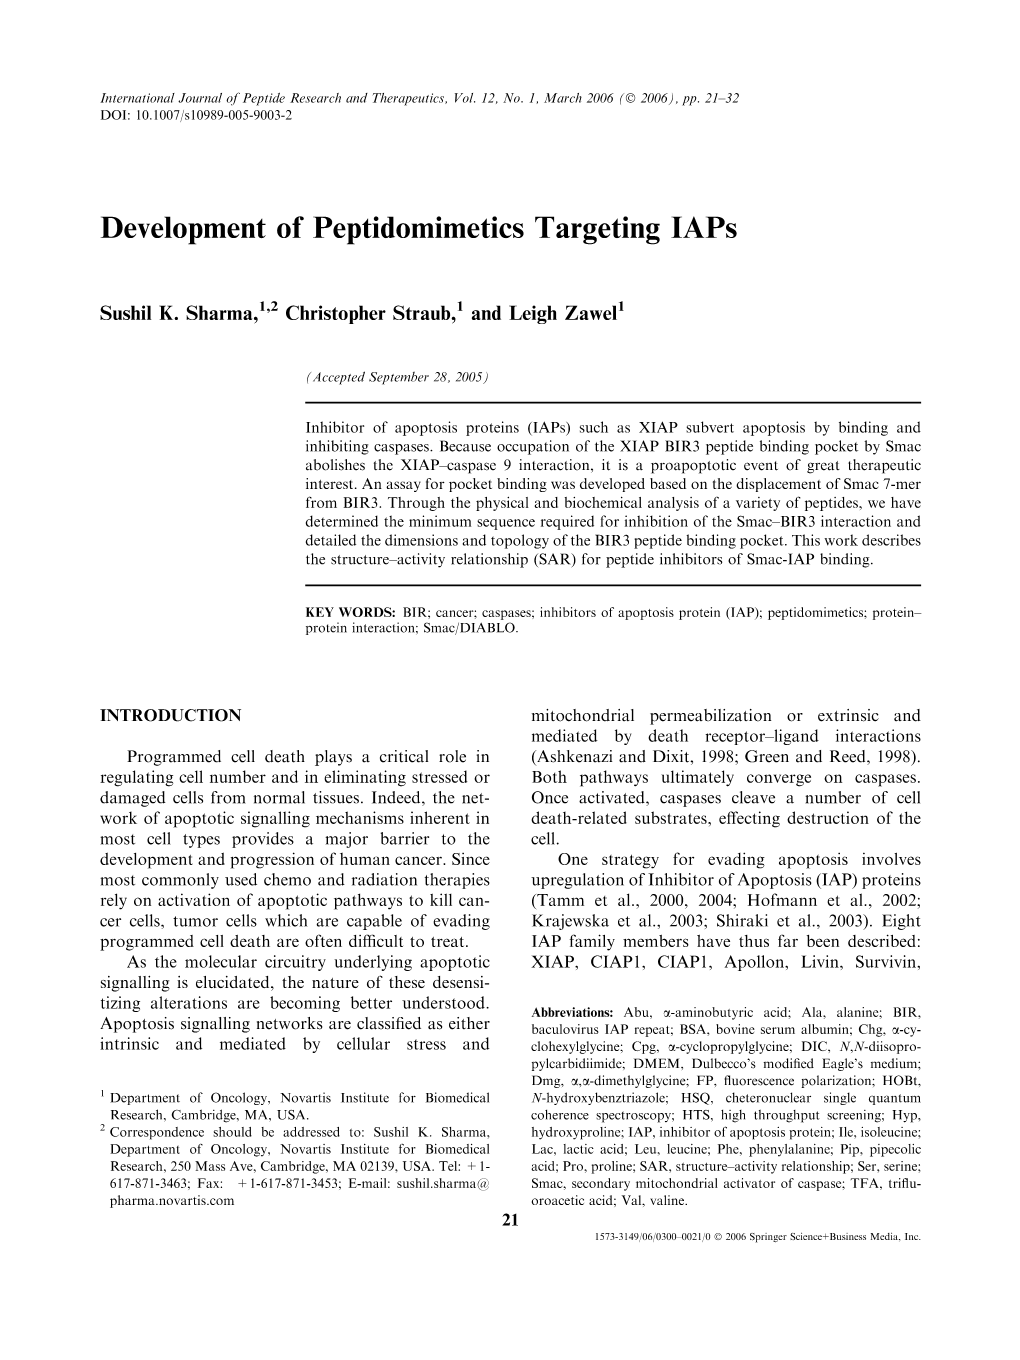 Development of Peptidomimetics Targeting Iaps